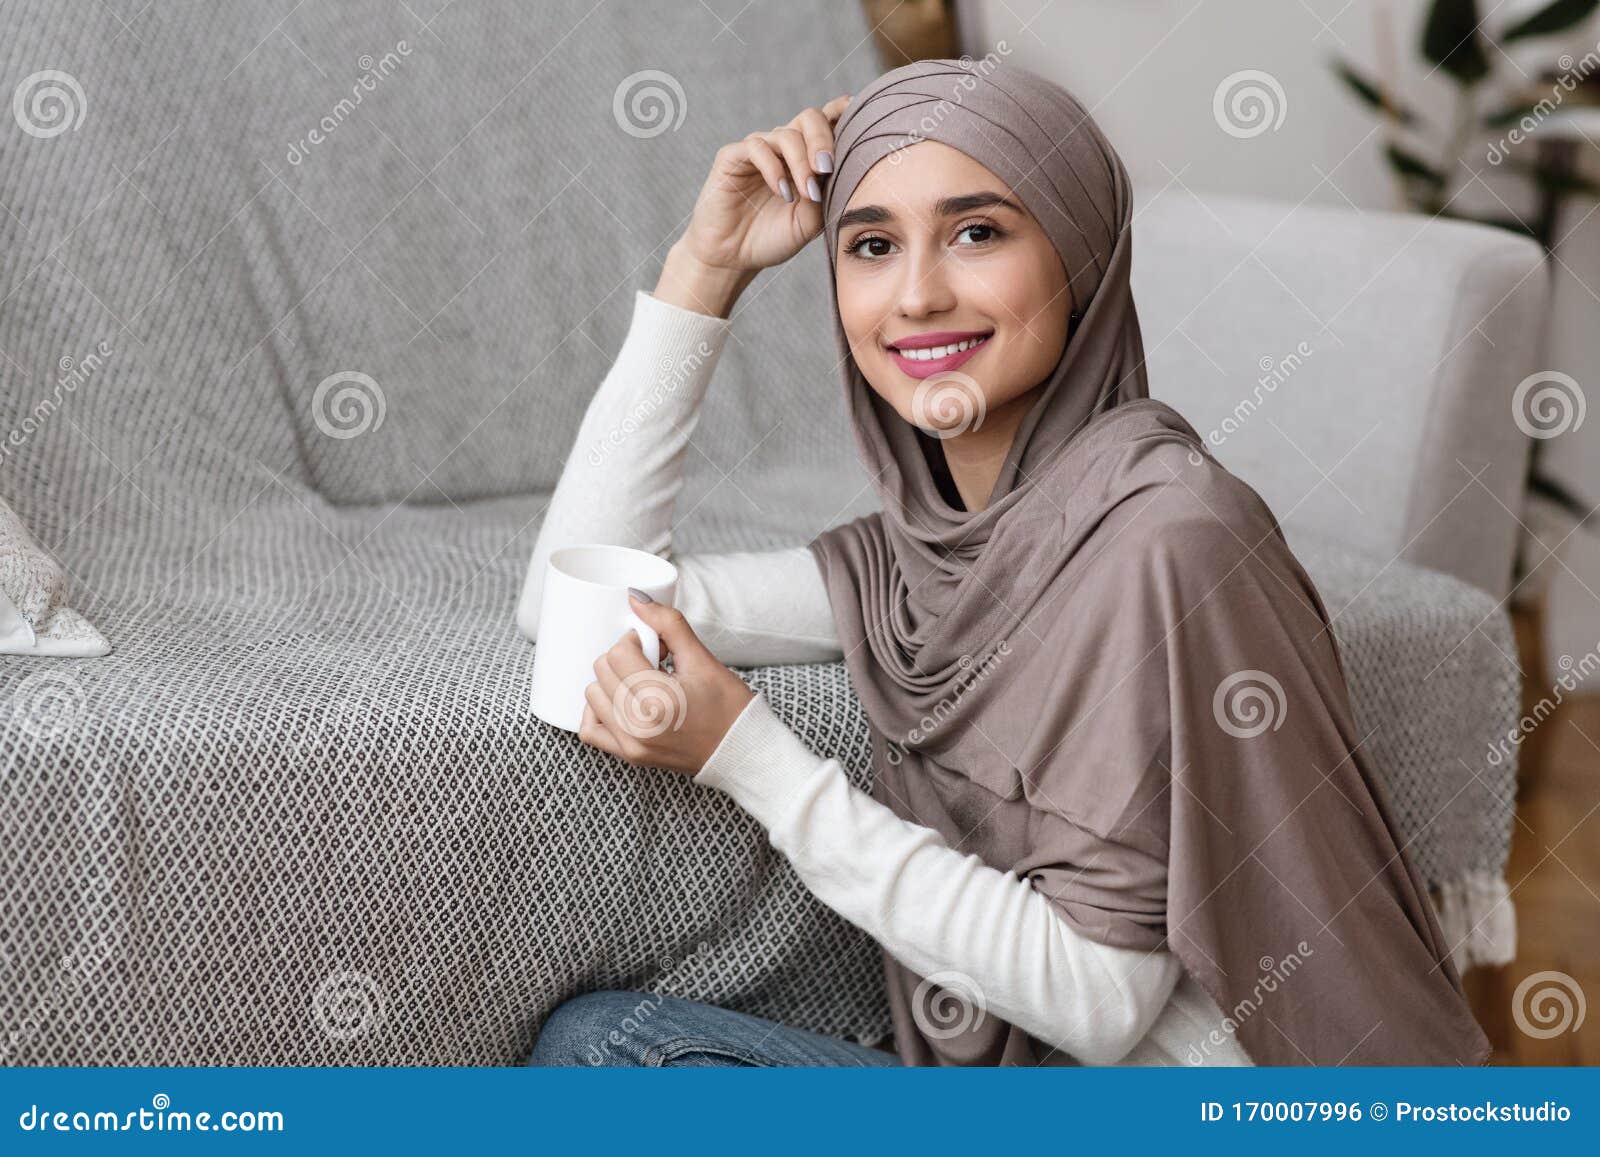 Muslim Sexy Girl Image